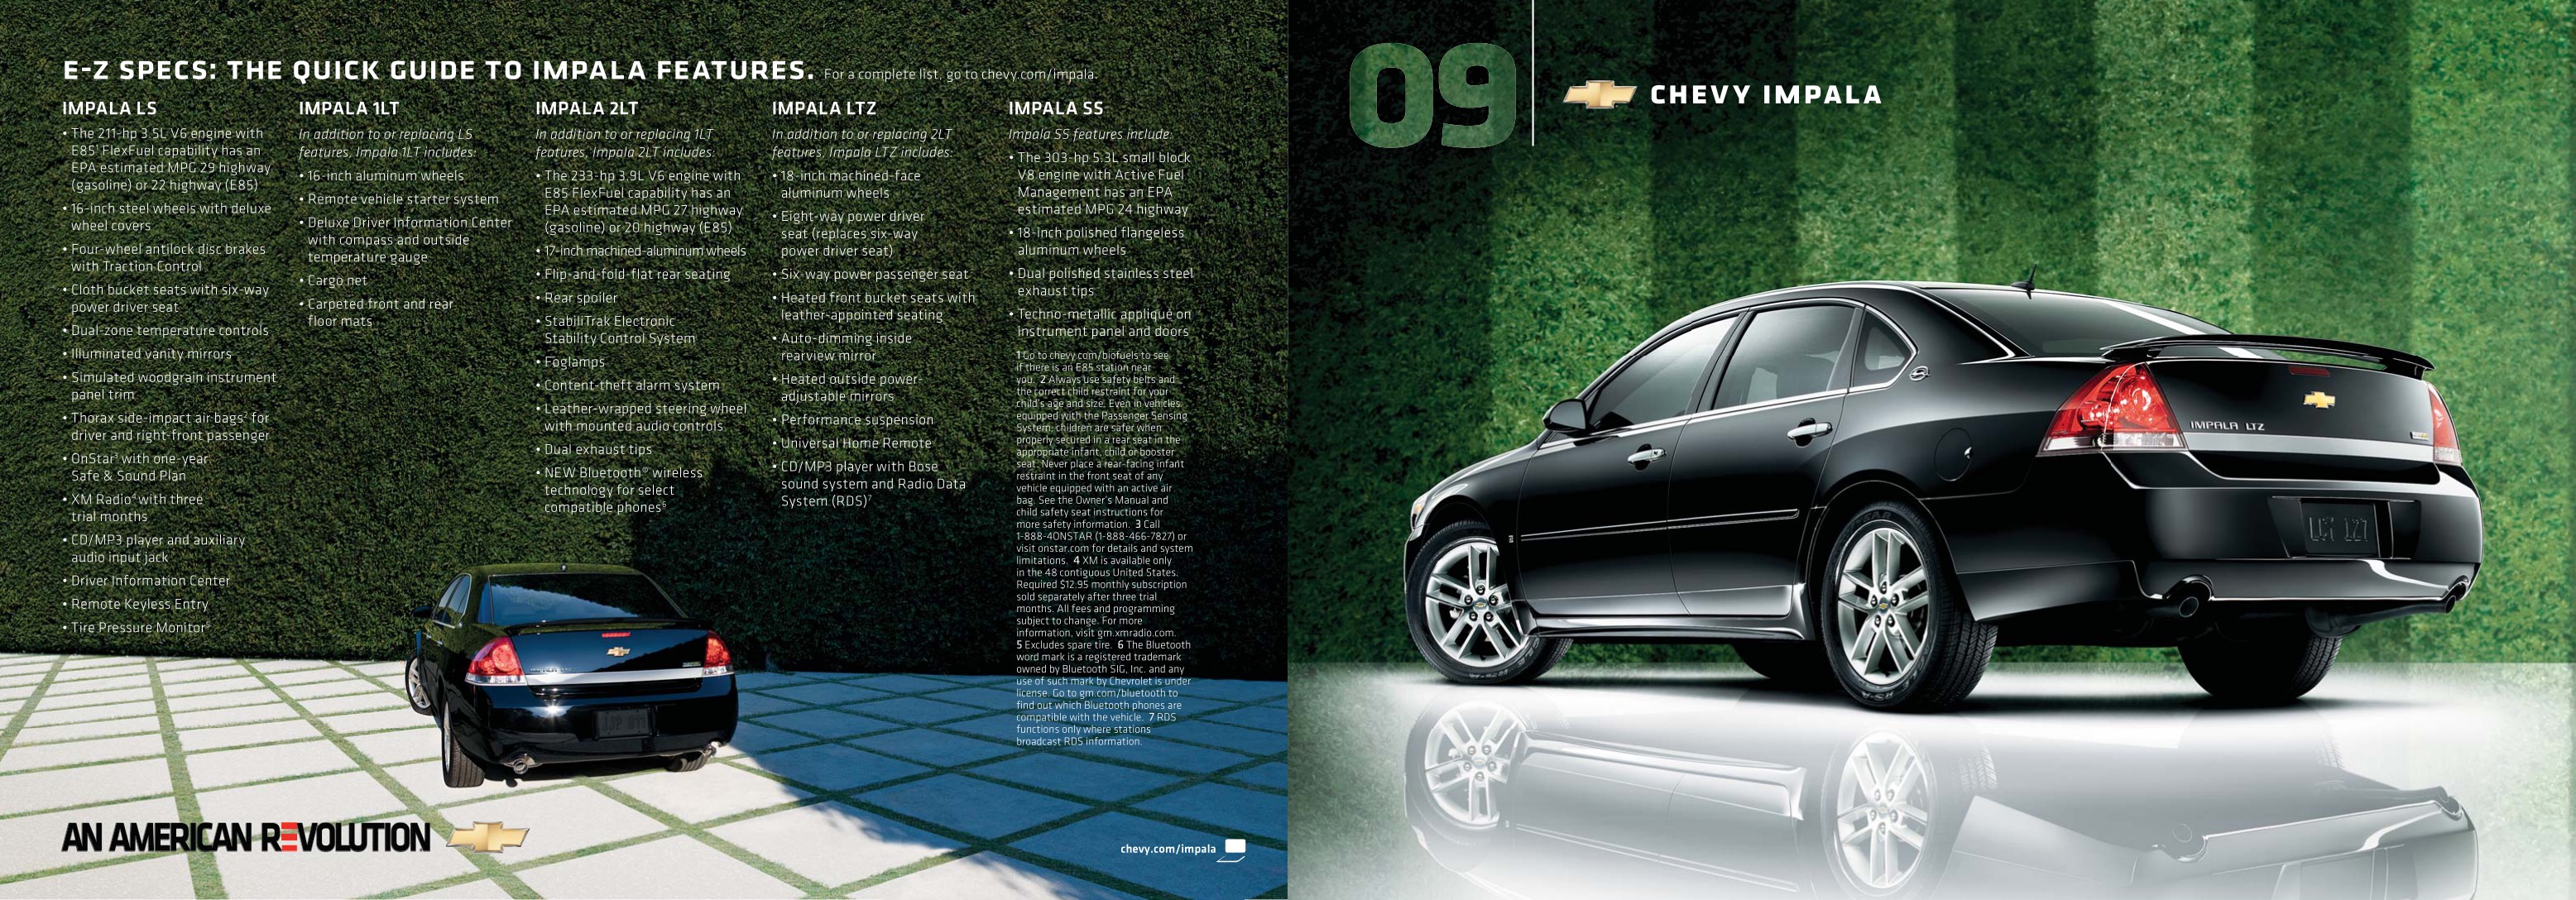 2009 Chevrolet Impala Brochure